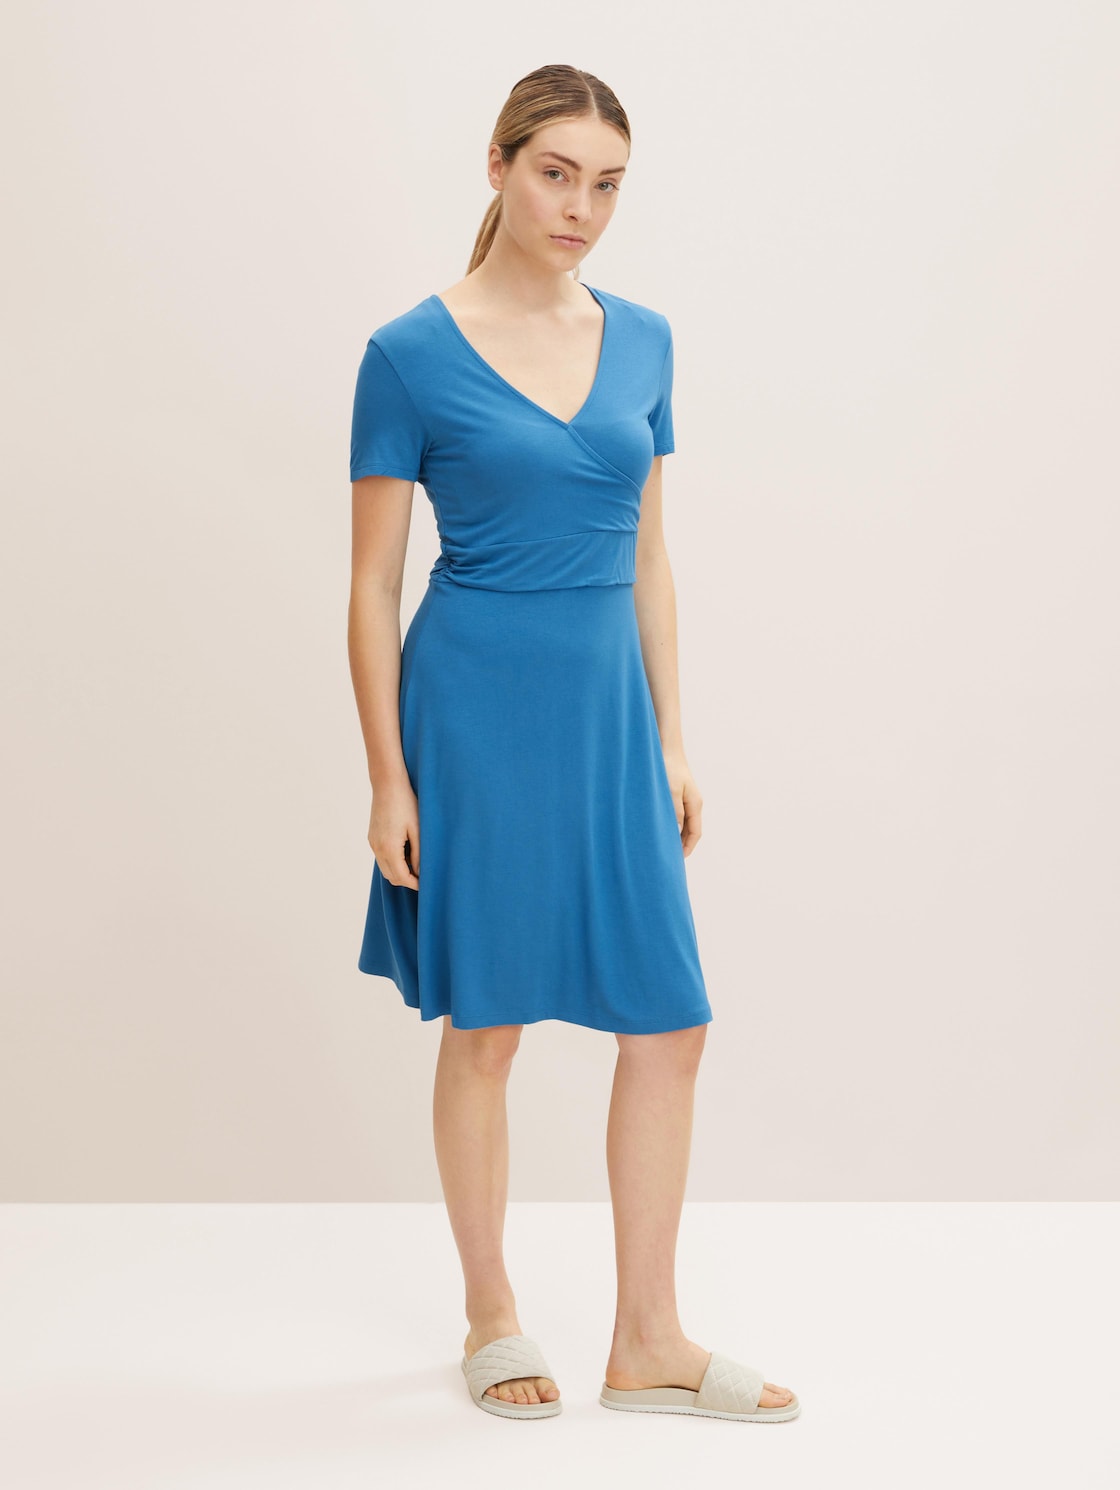 TOM TAILOR Damen Kleid in Wickeloptik, blau, Gr. 46, viskose